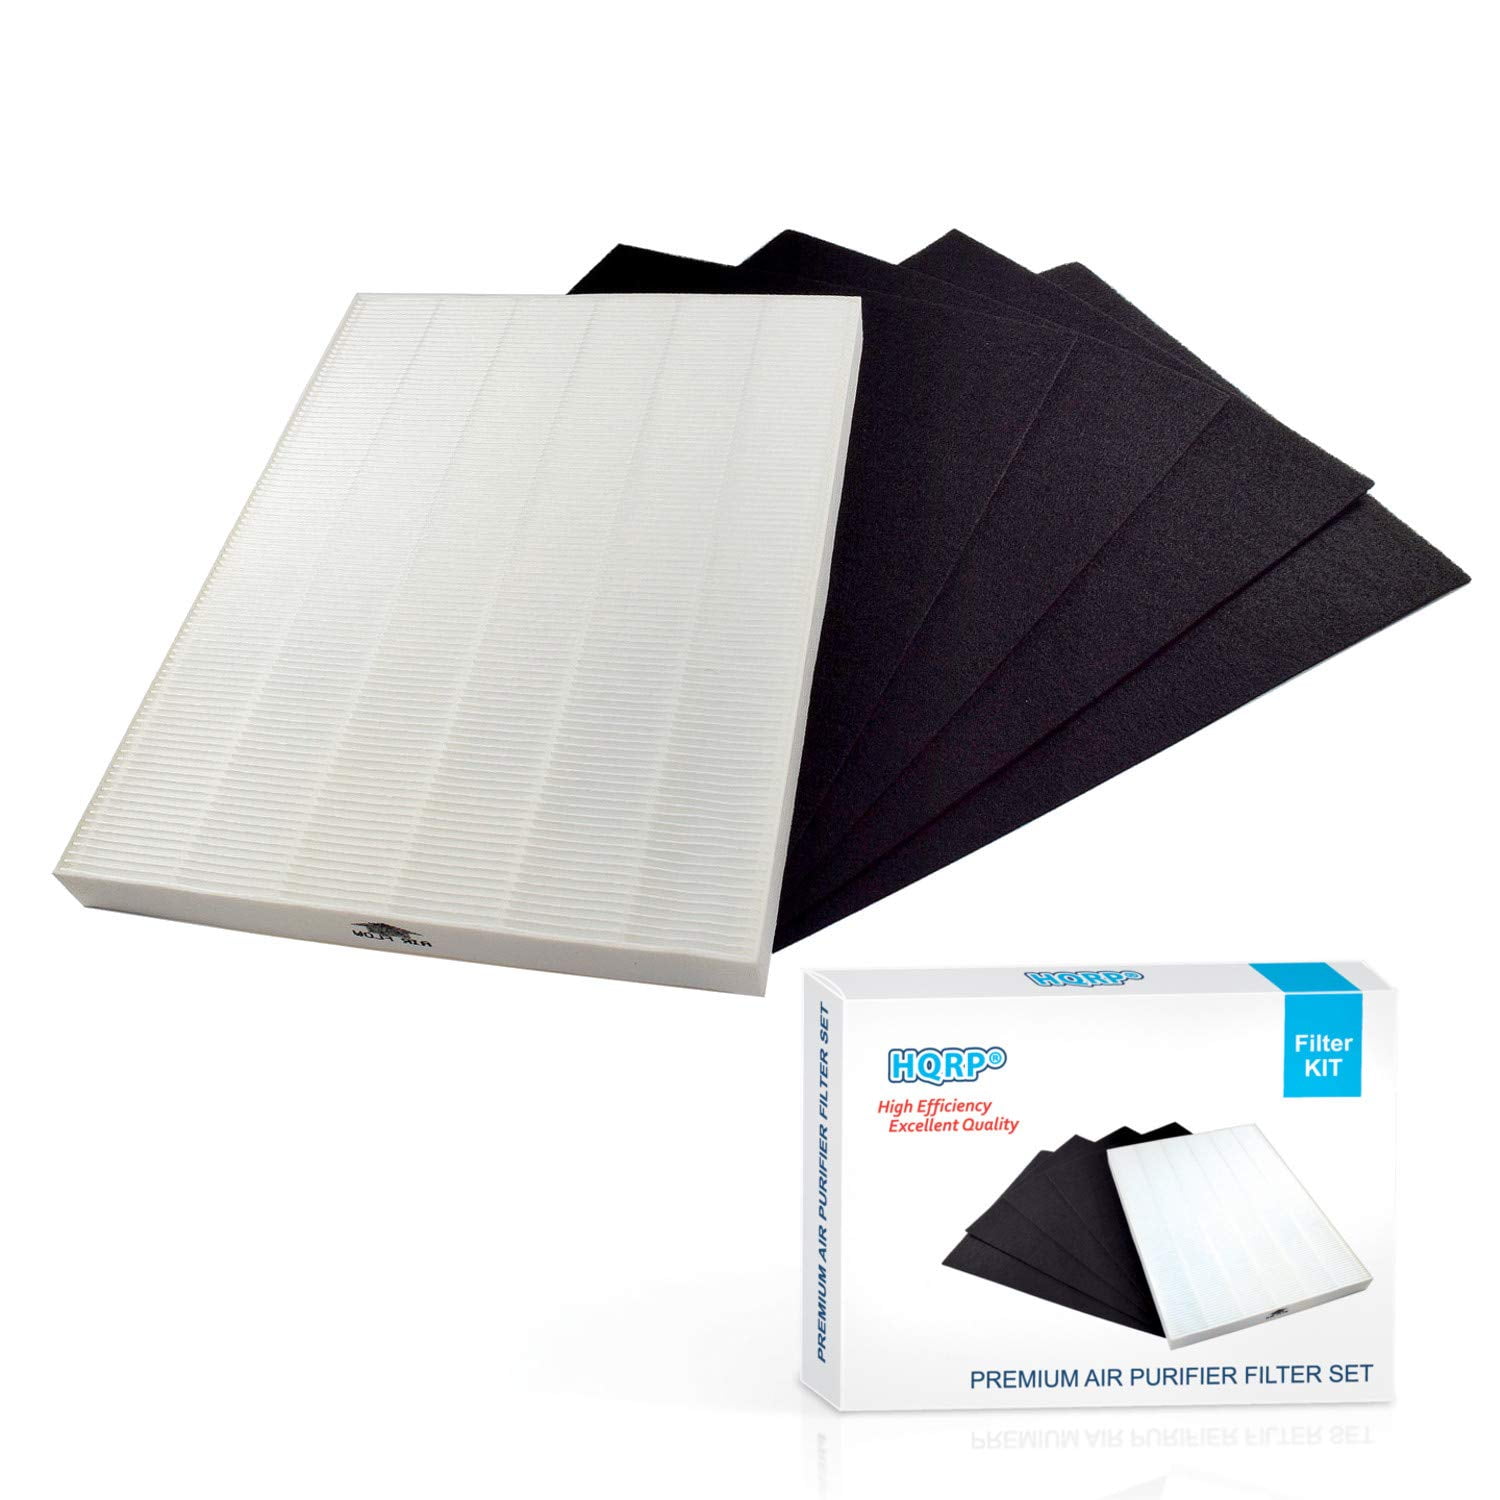 2 Pre-filter Kenmore 85300-85301 118012‑KM Purifier Air Filter generic 